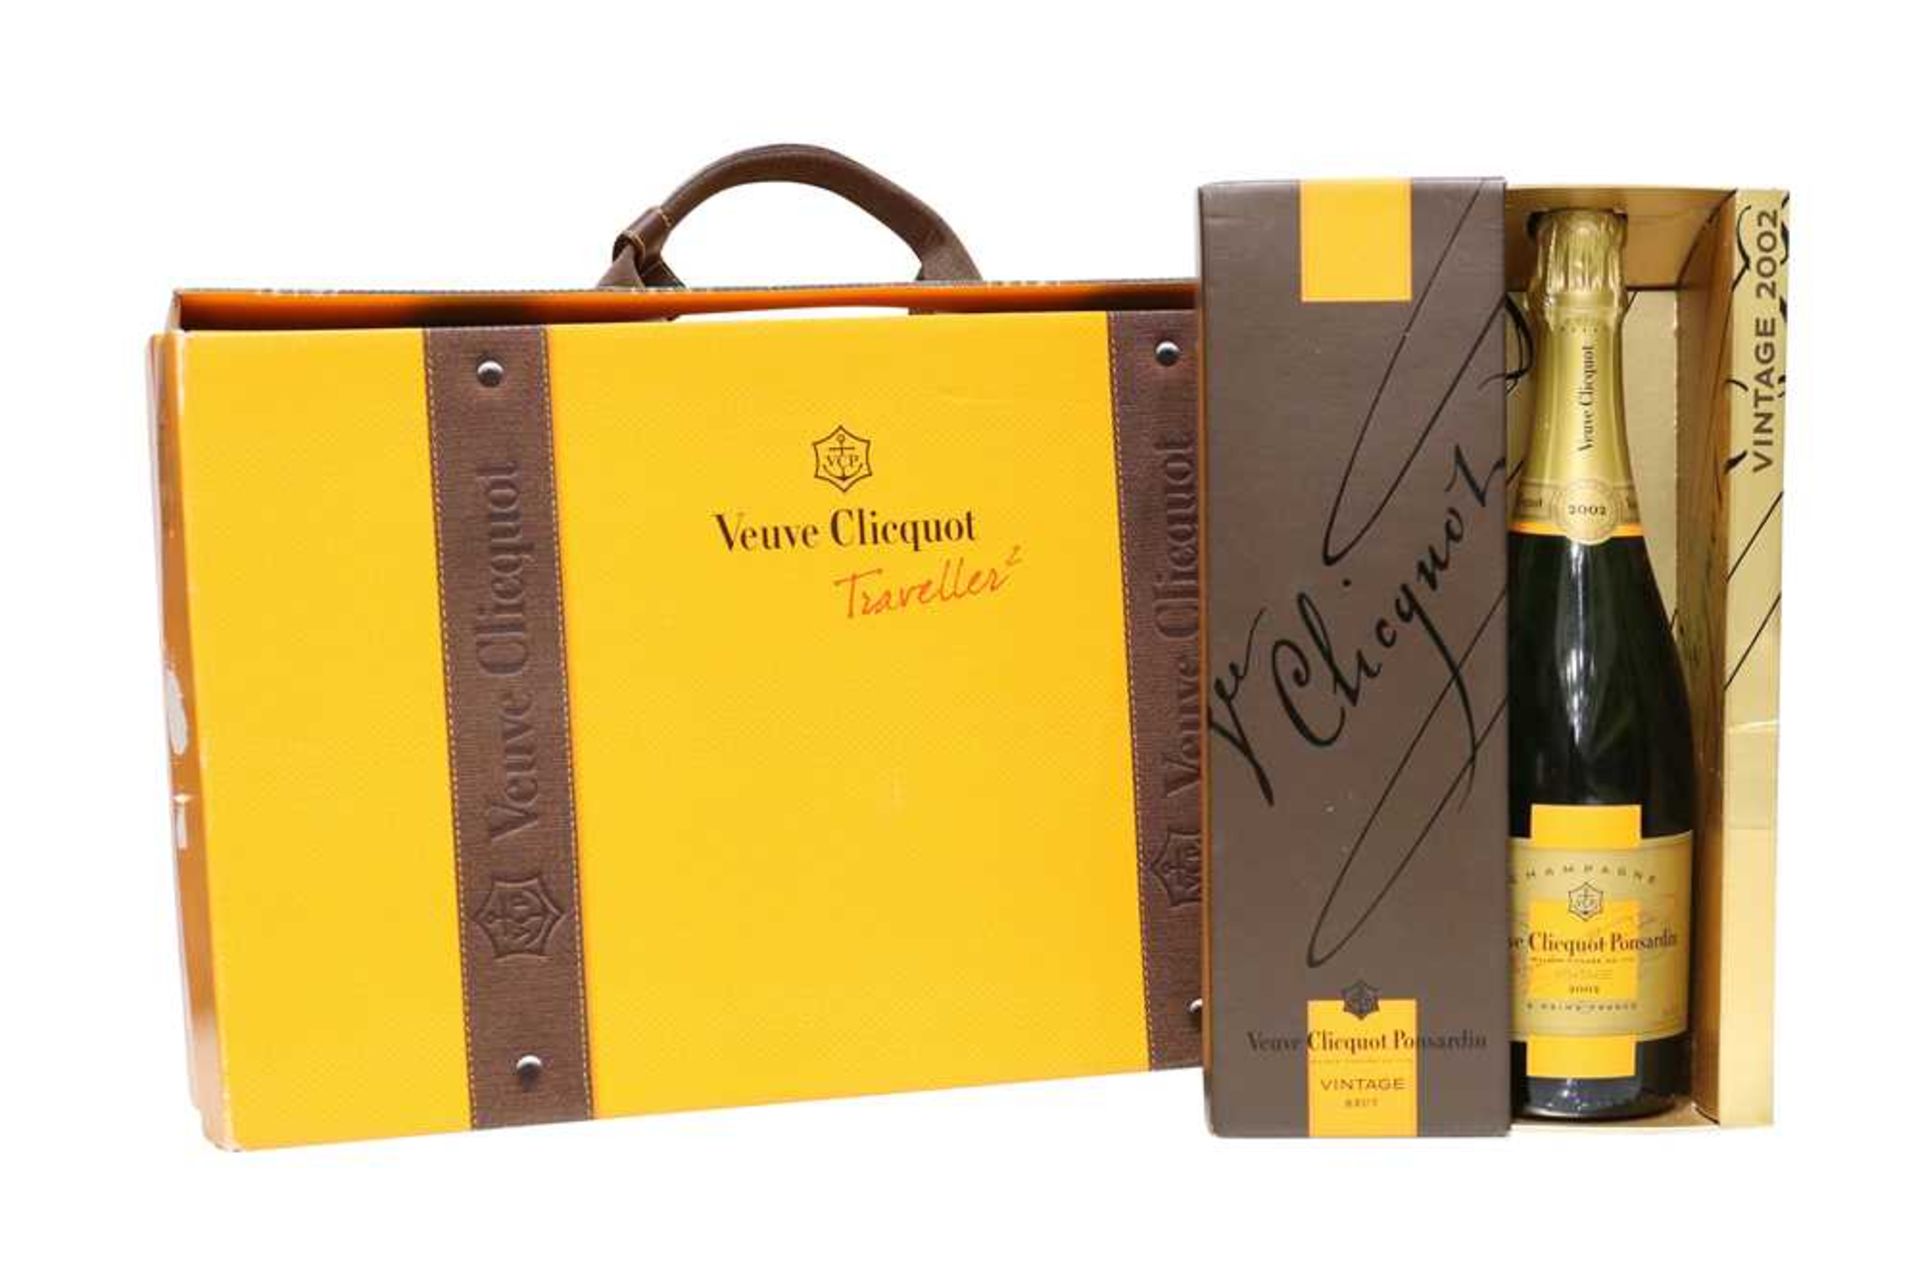 Veuve Clicquot Ponsardin, Reims, 2002, one bottle and a Veuve Clicquot carry case - Image 3 of 3